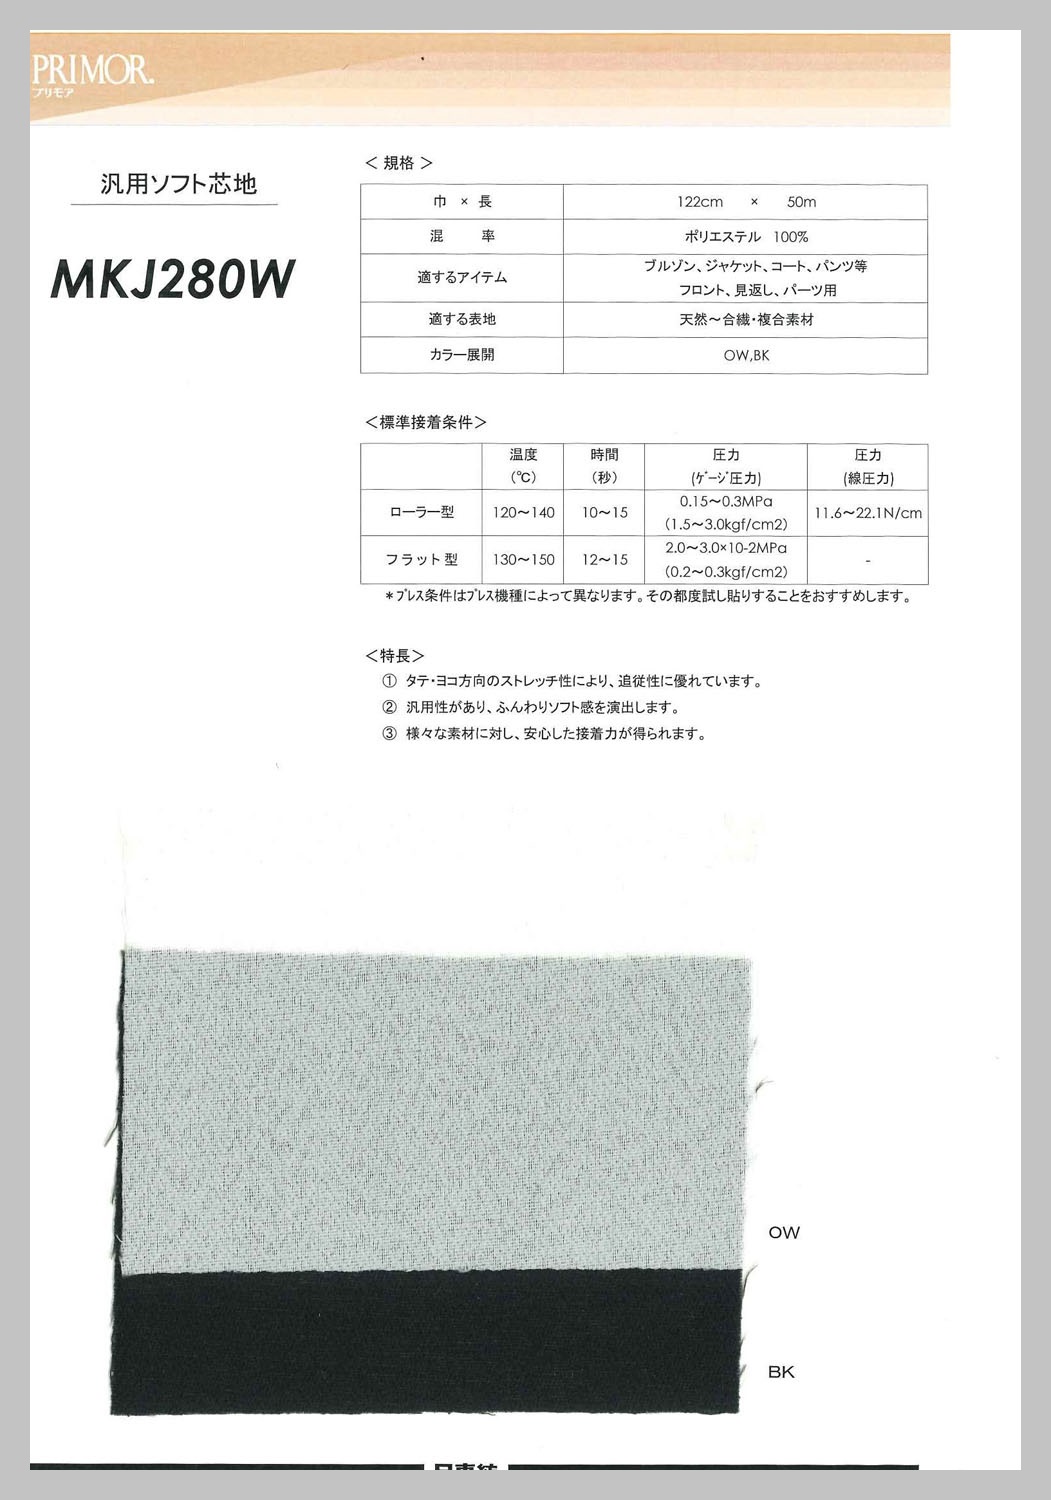 MKJ280W ジャケット・コート用汎用加工糸芯地日中グローバル展開シリーズ サンプル帳